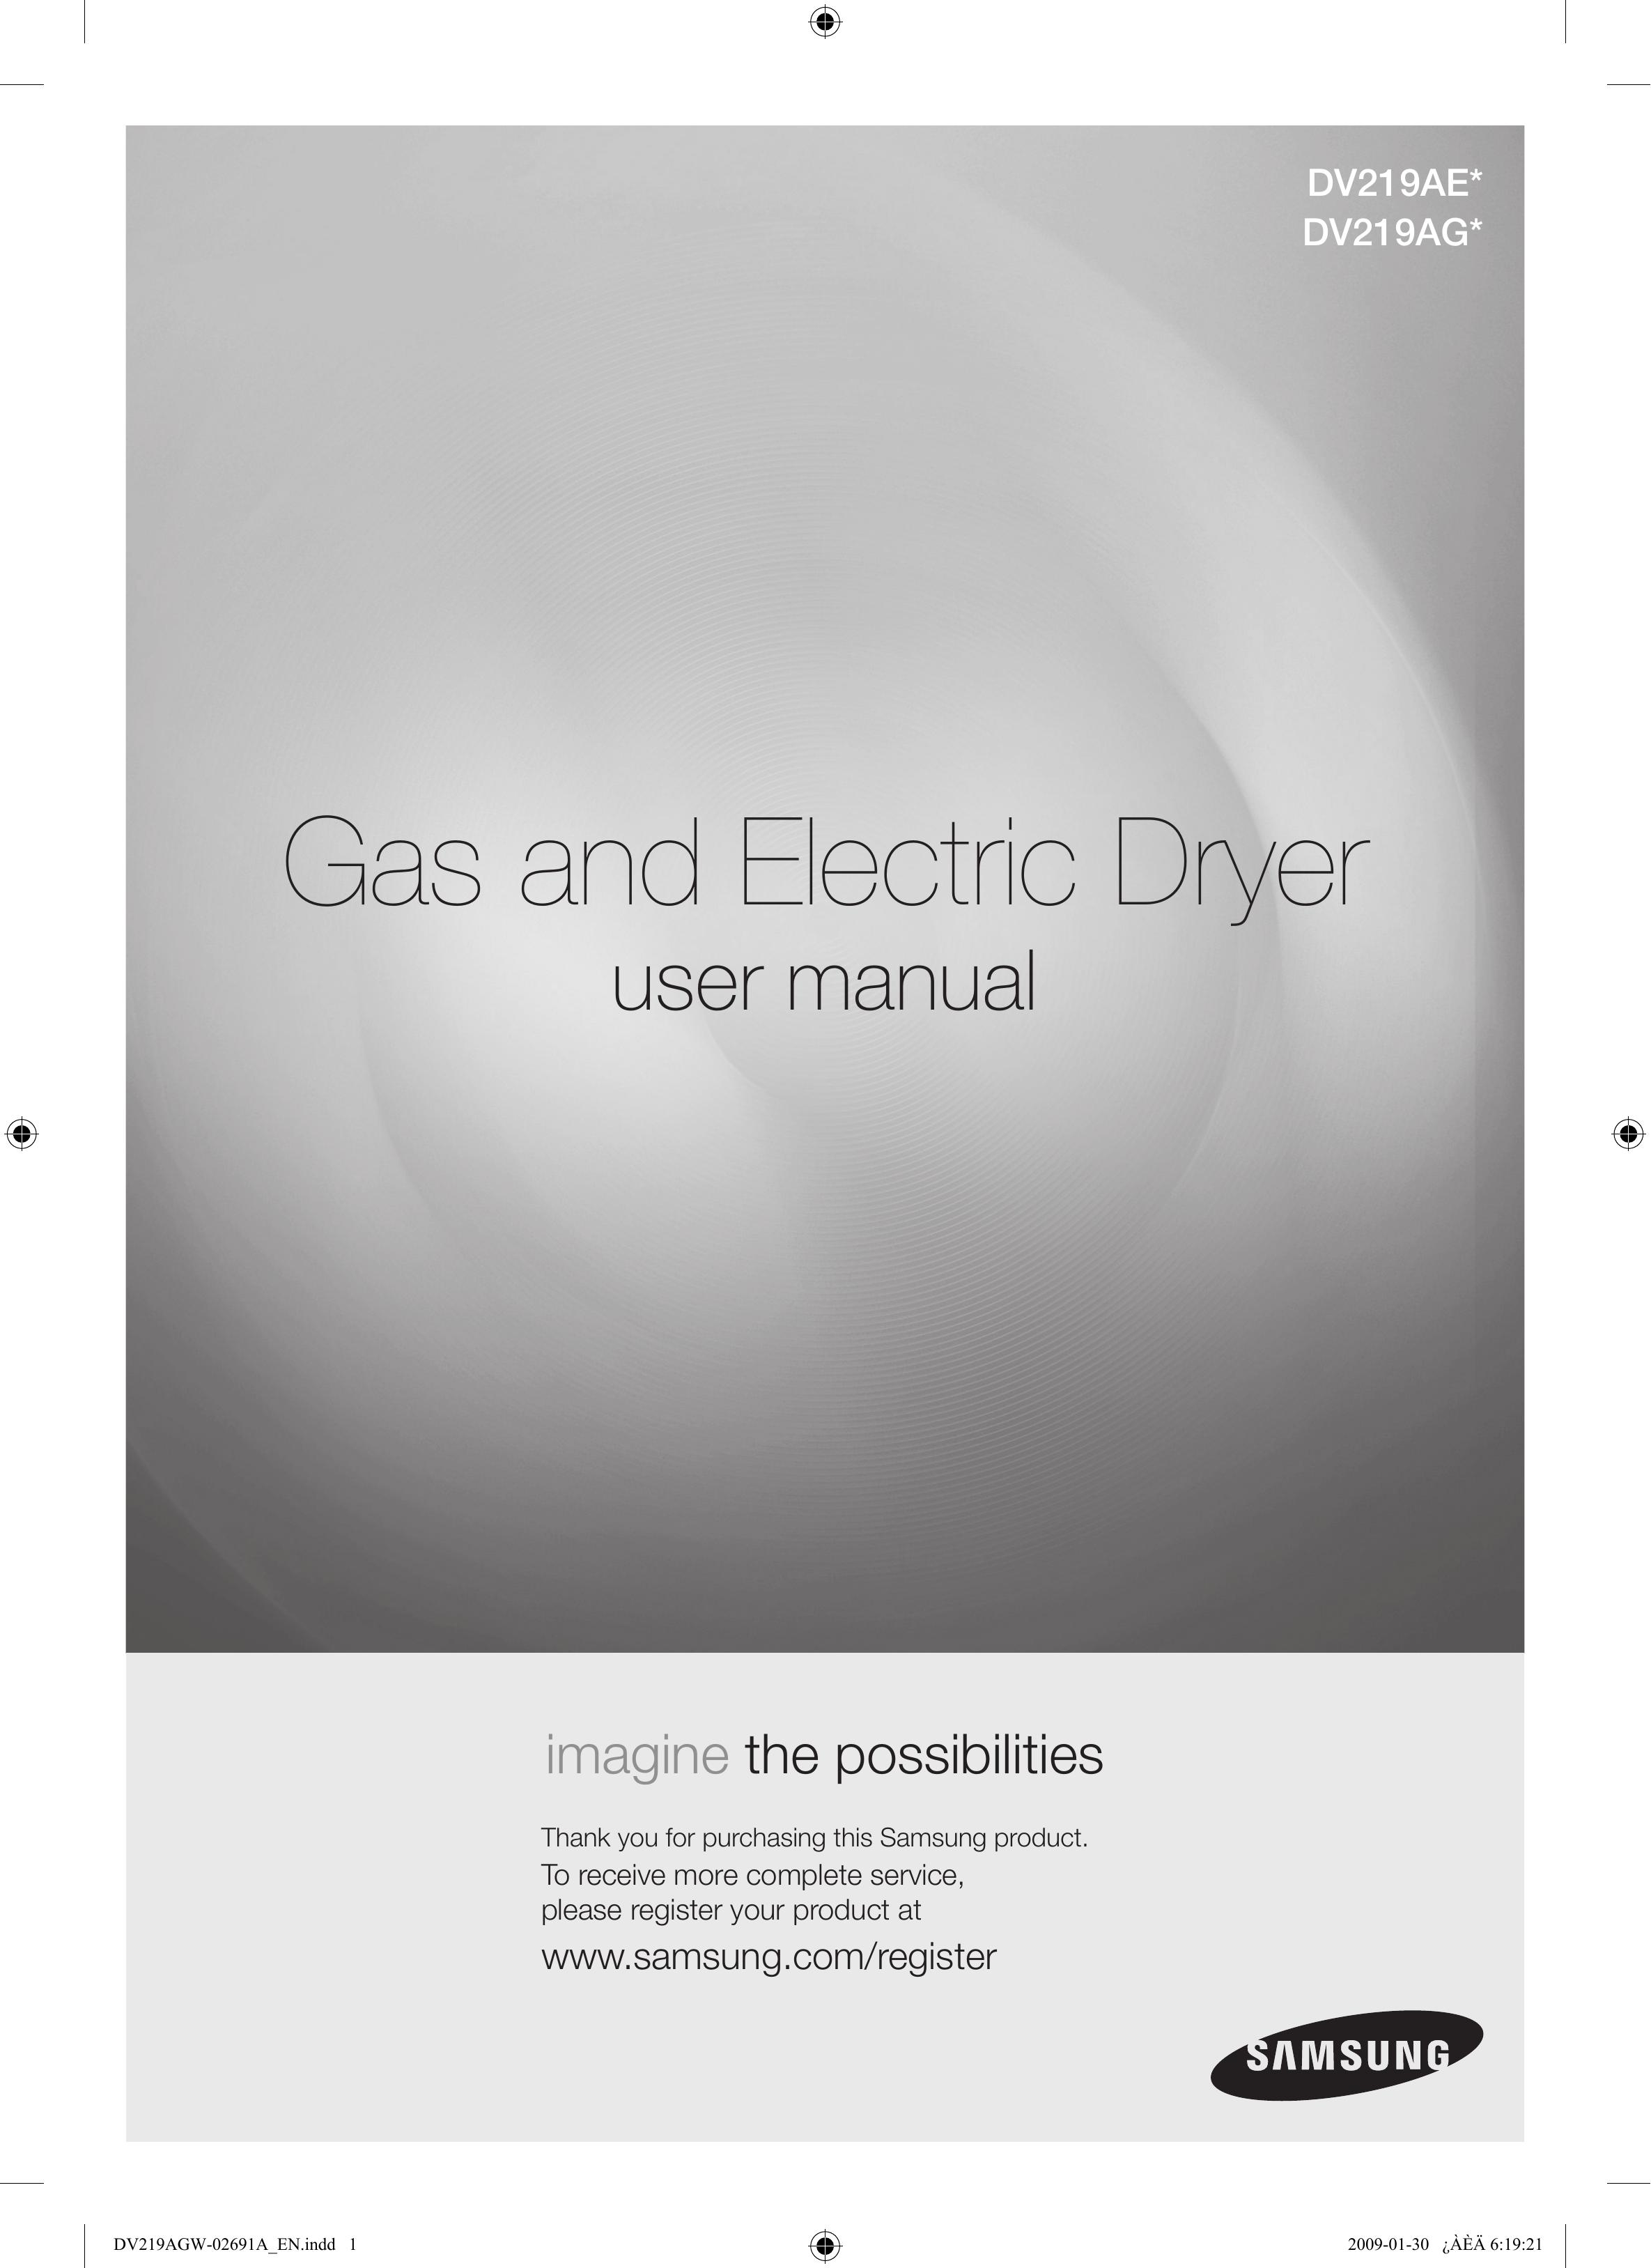 Samsung DV219AG* Clothes Dryer User Manual